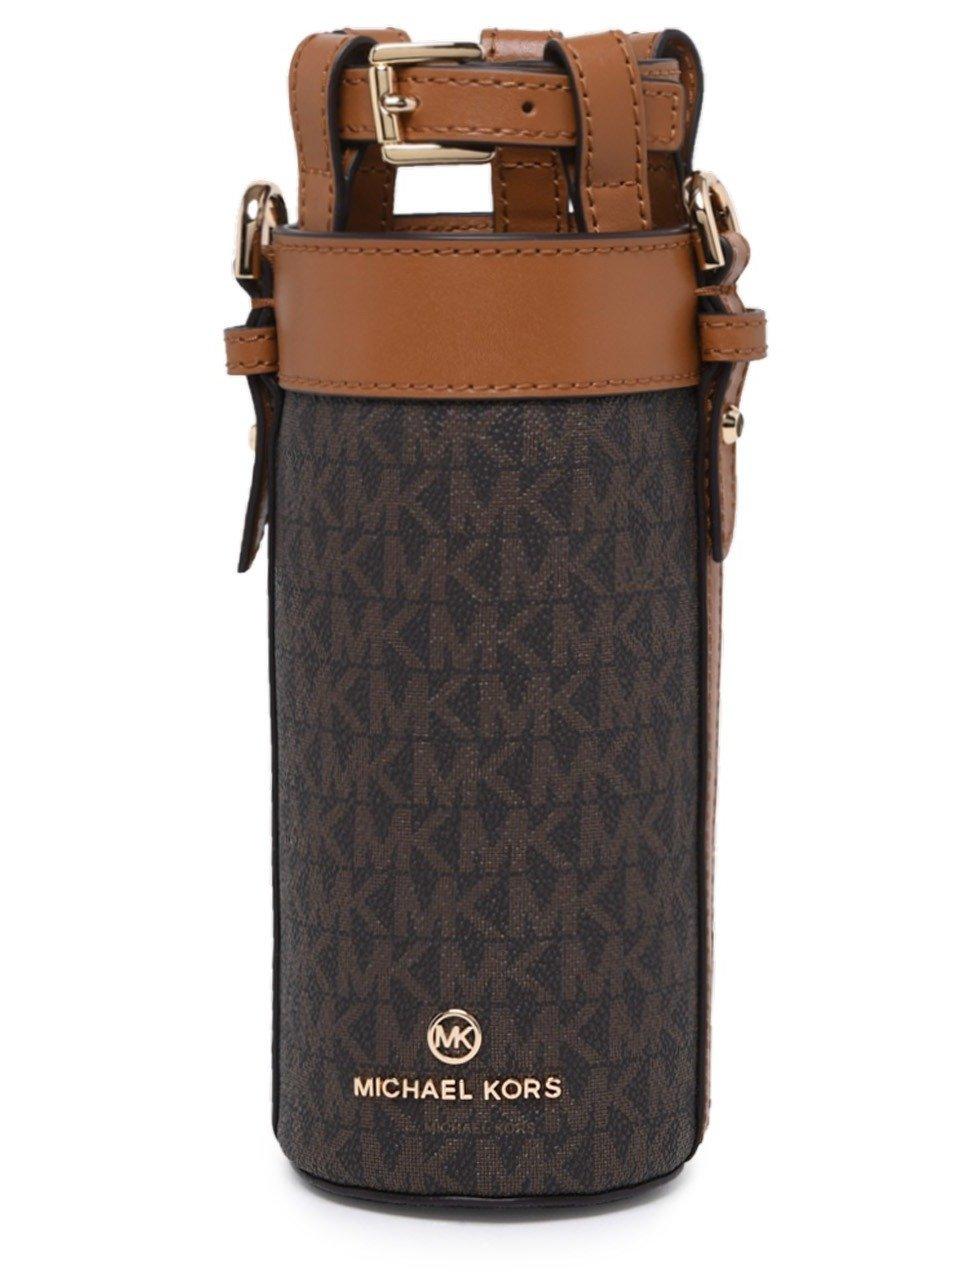 Cross body bags Michael Kors - Brown leather crossbody bag